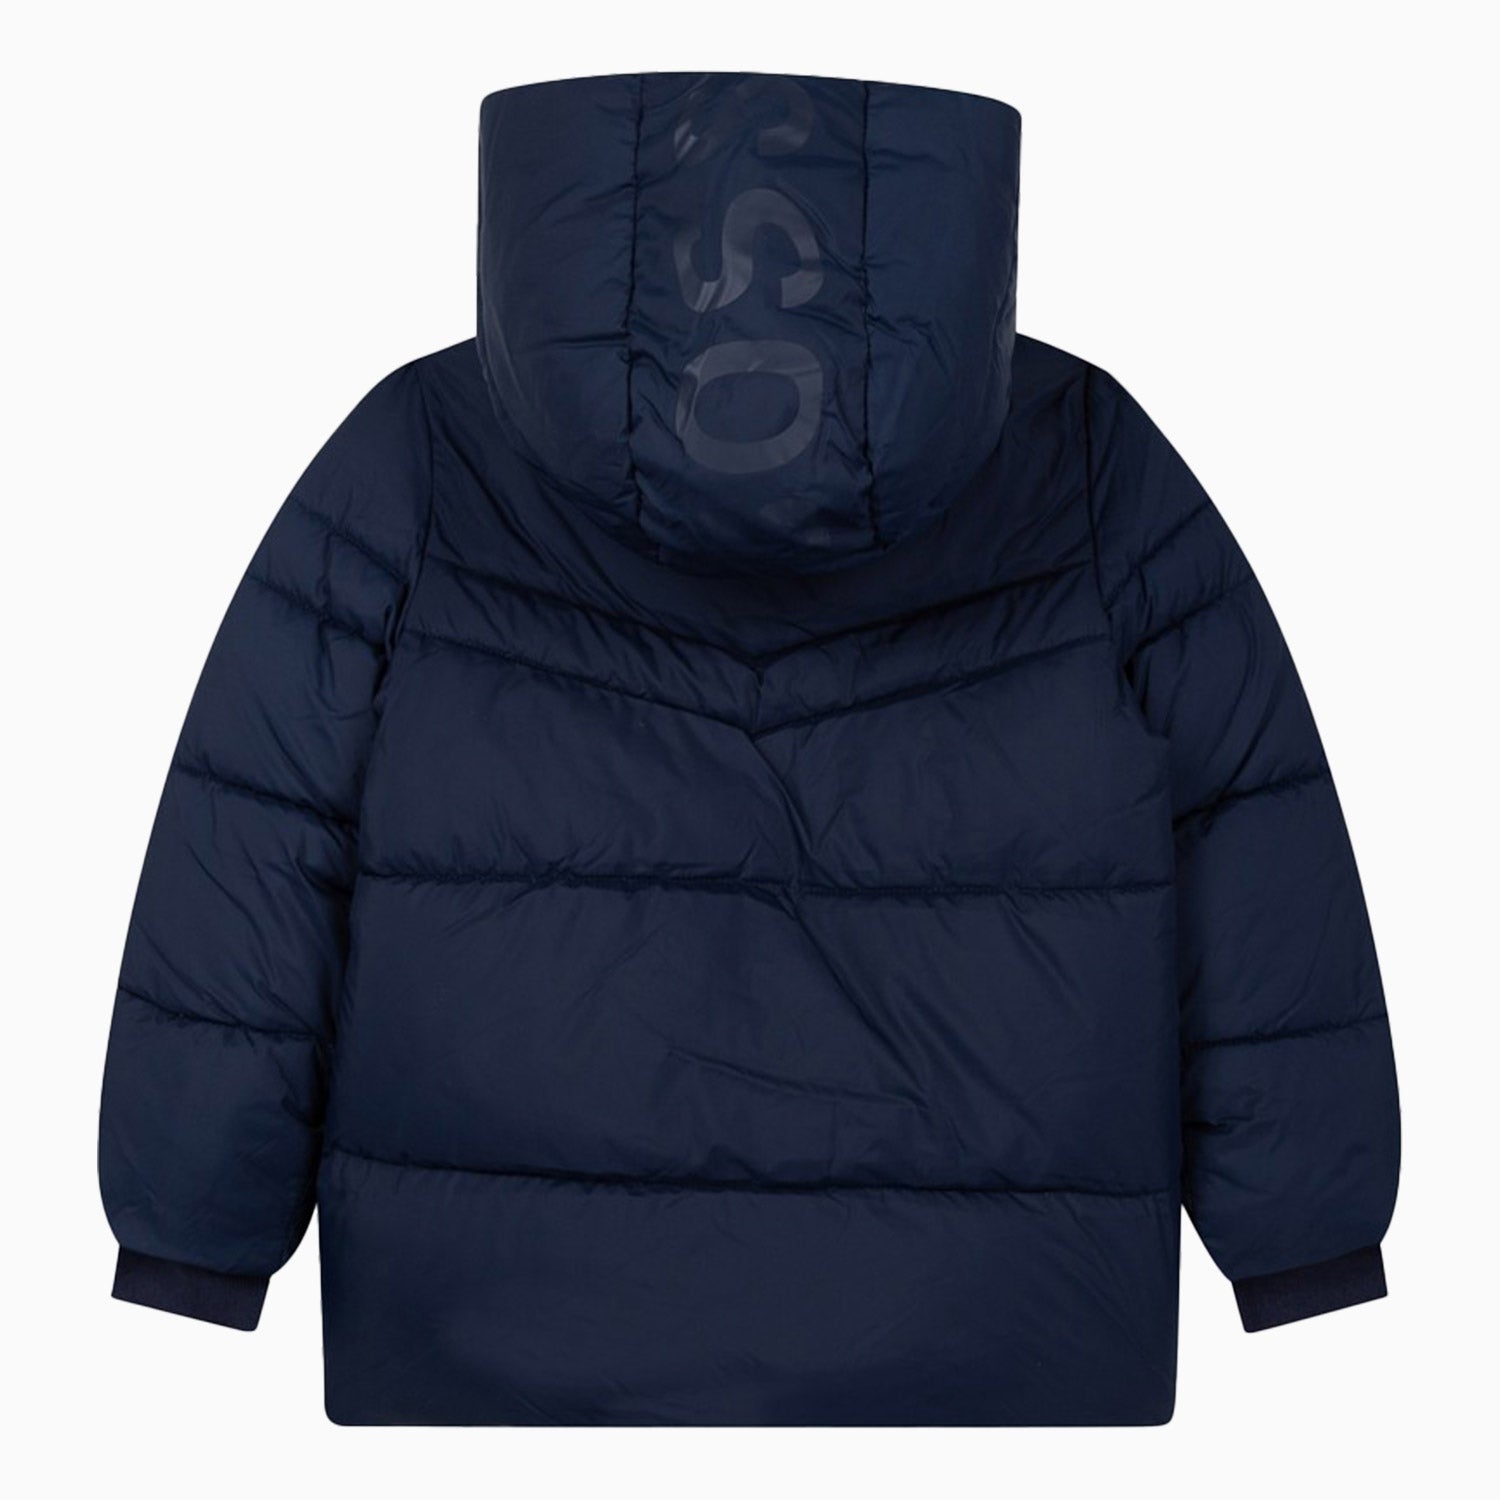 Hugo Boss Kid's Puffer Jacket - Color: Blue, Red, Navy Blue - Kids Premium Clothing -